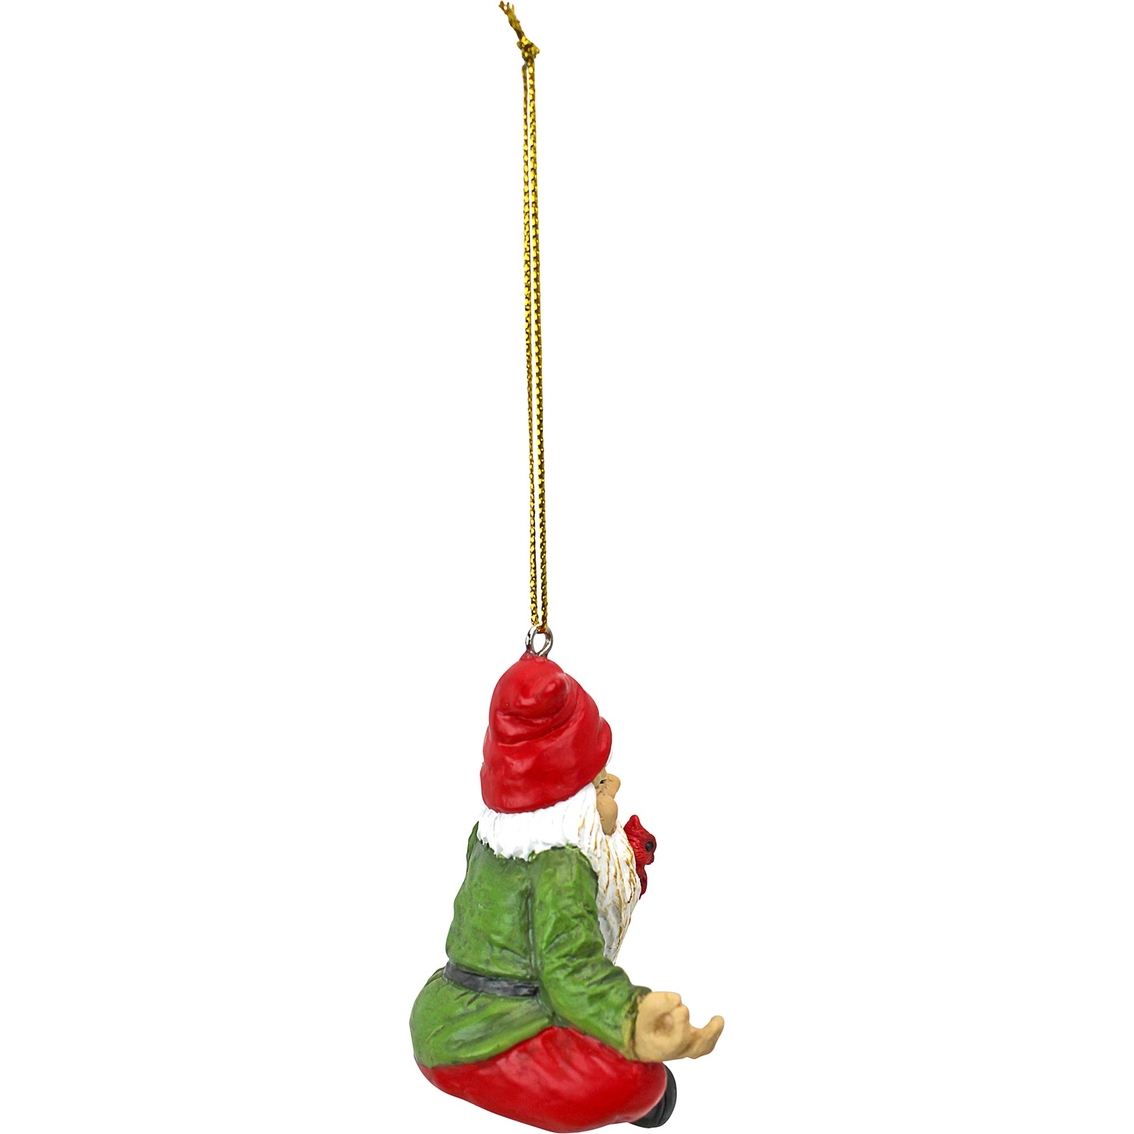 Design Toscano Zen Gnome Holiday Ornament - Image 2 of 4